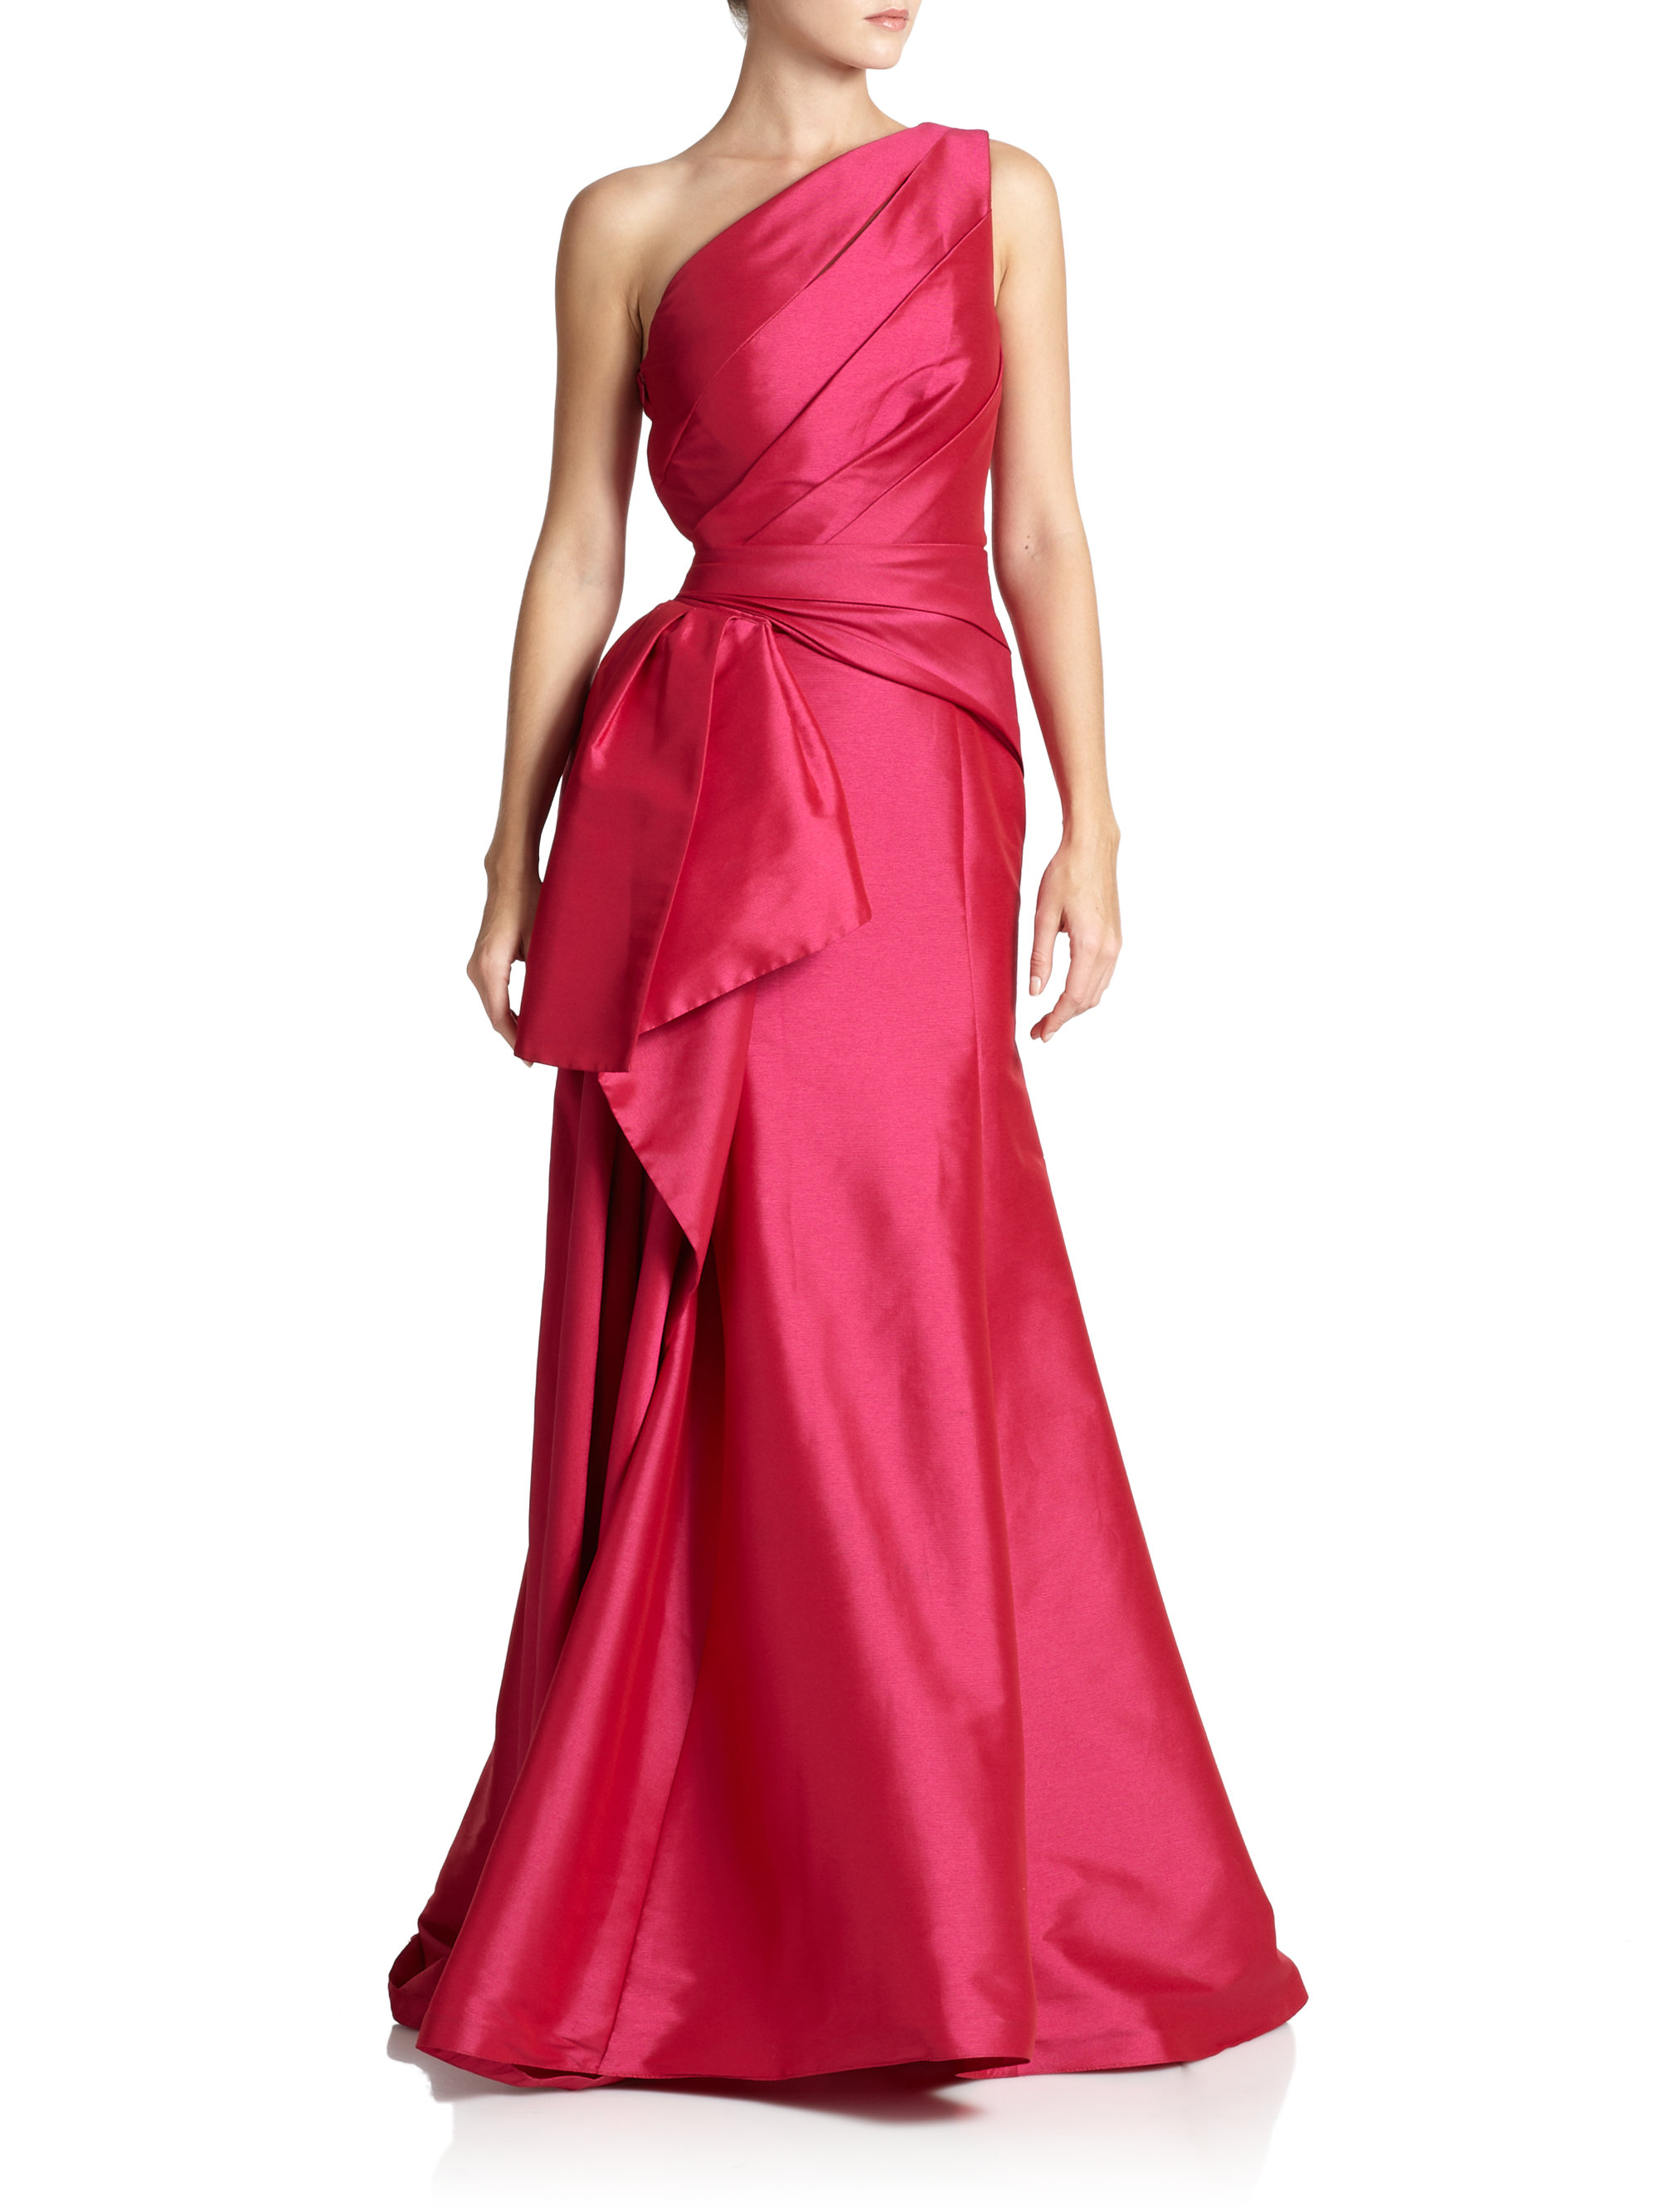 Ml monique lhuillier Faille Satin One-Shoulder Gown in Pink | Lyst